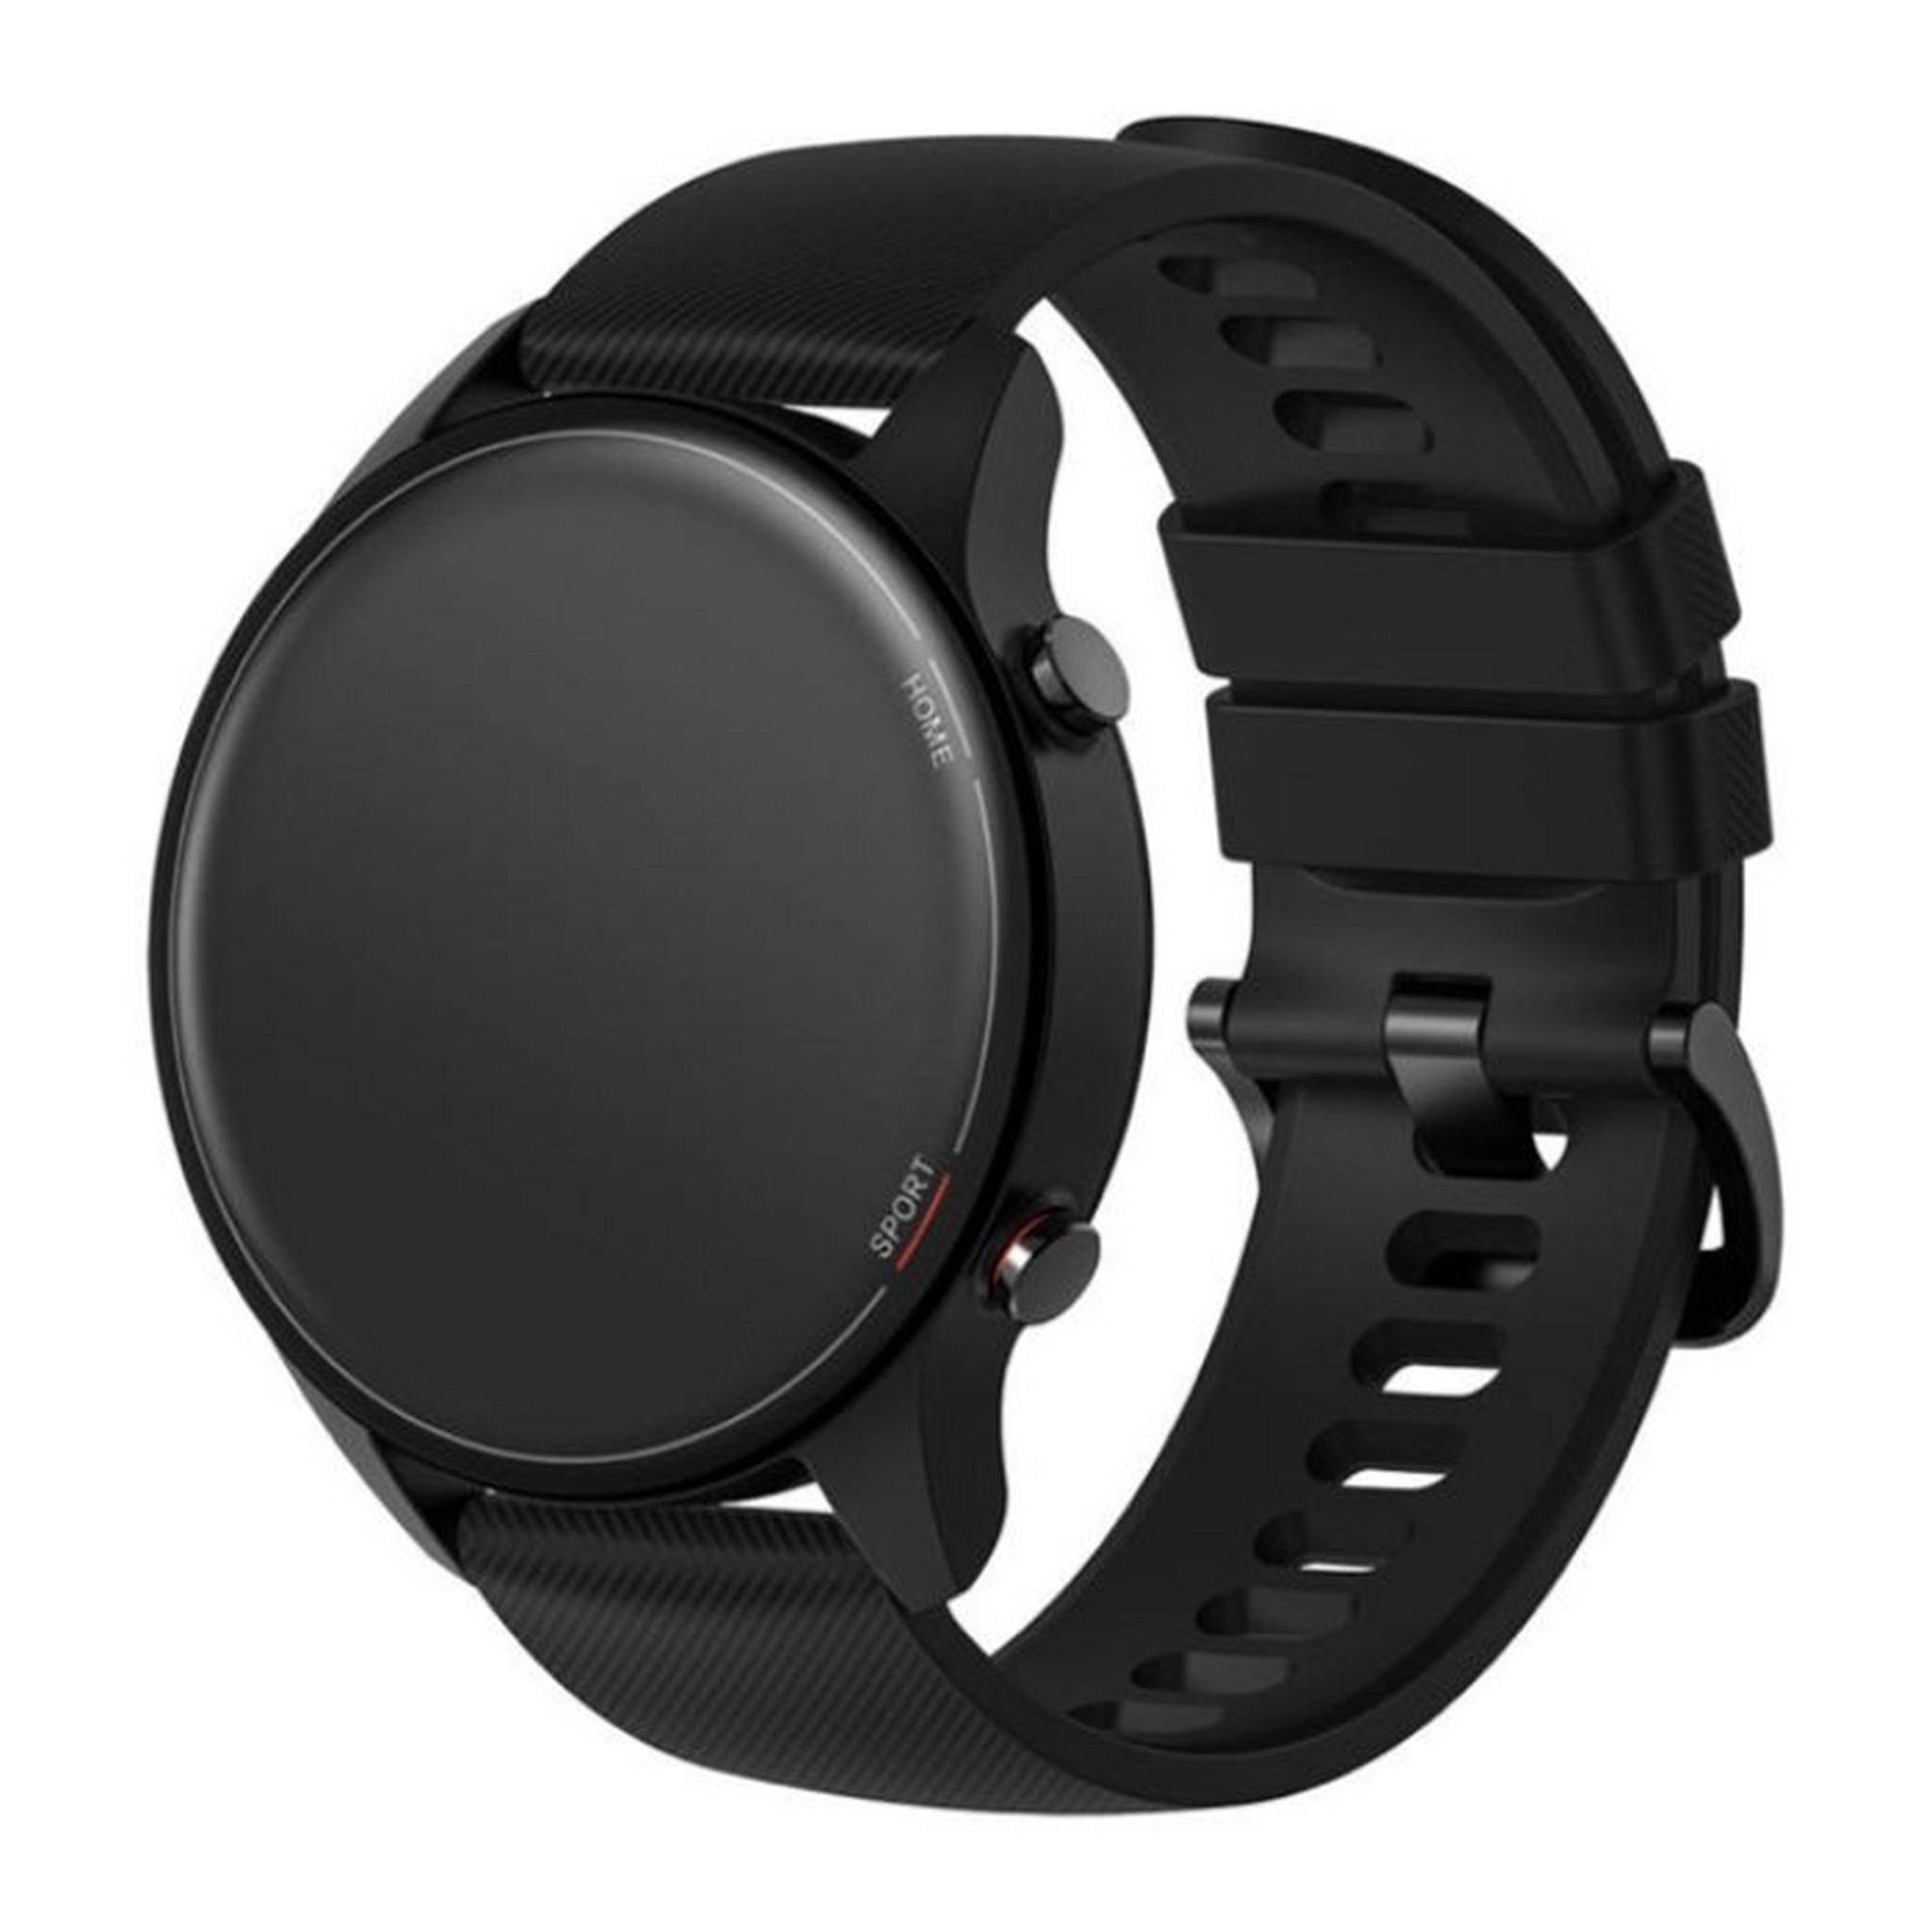 Xiaomi Mi Smart Watch - Black